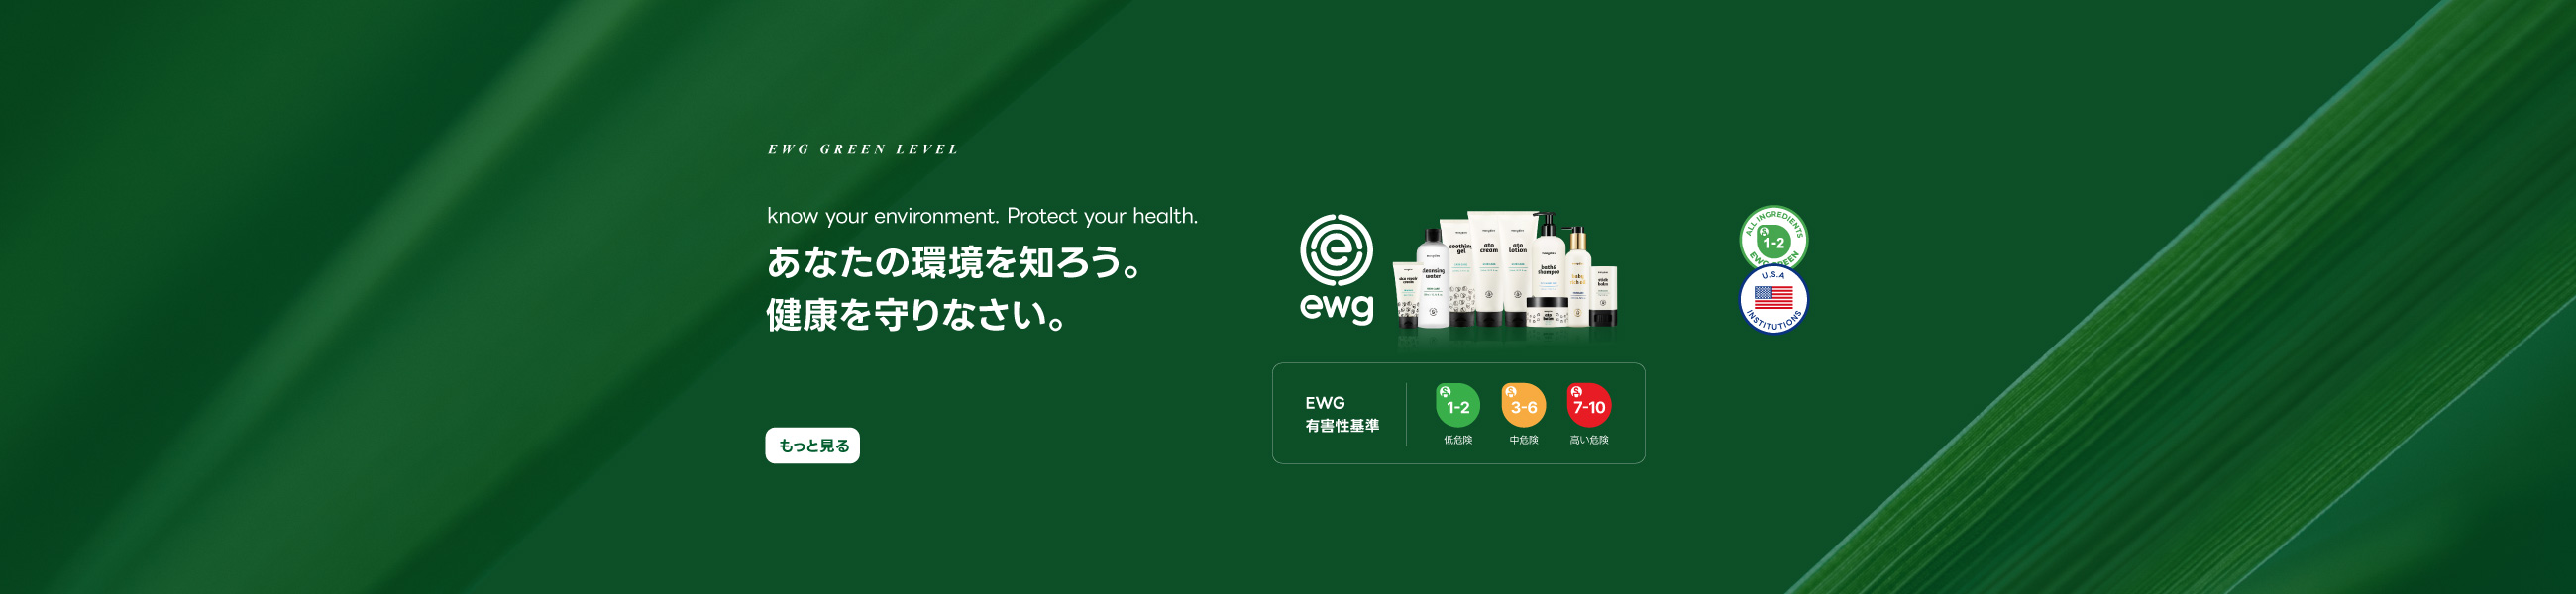 EWG(有害性基準) GREEN LEVEL あなたの環境を知ろう。健康を守りなさい。